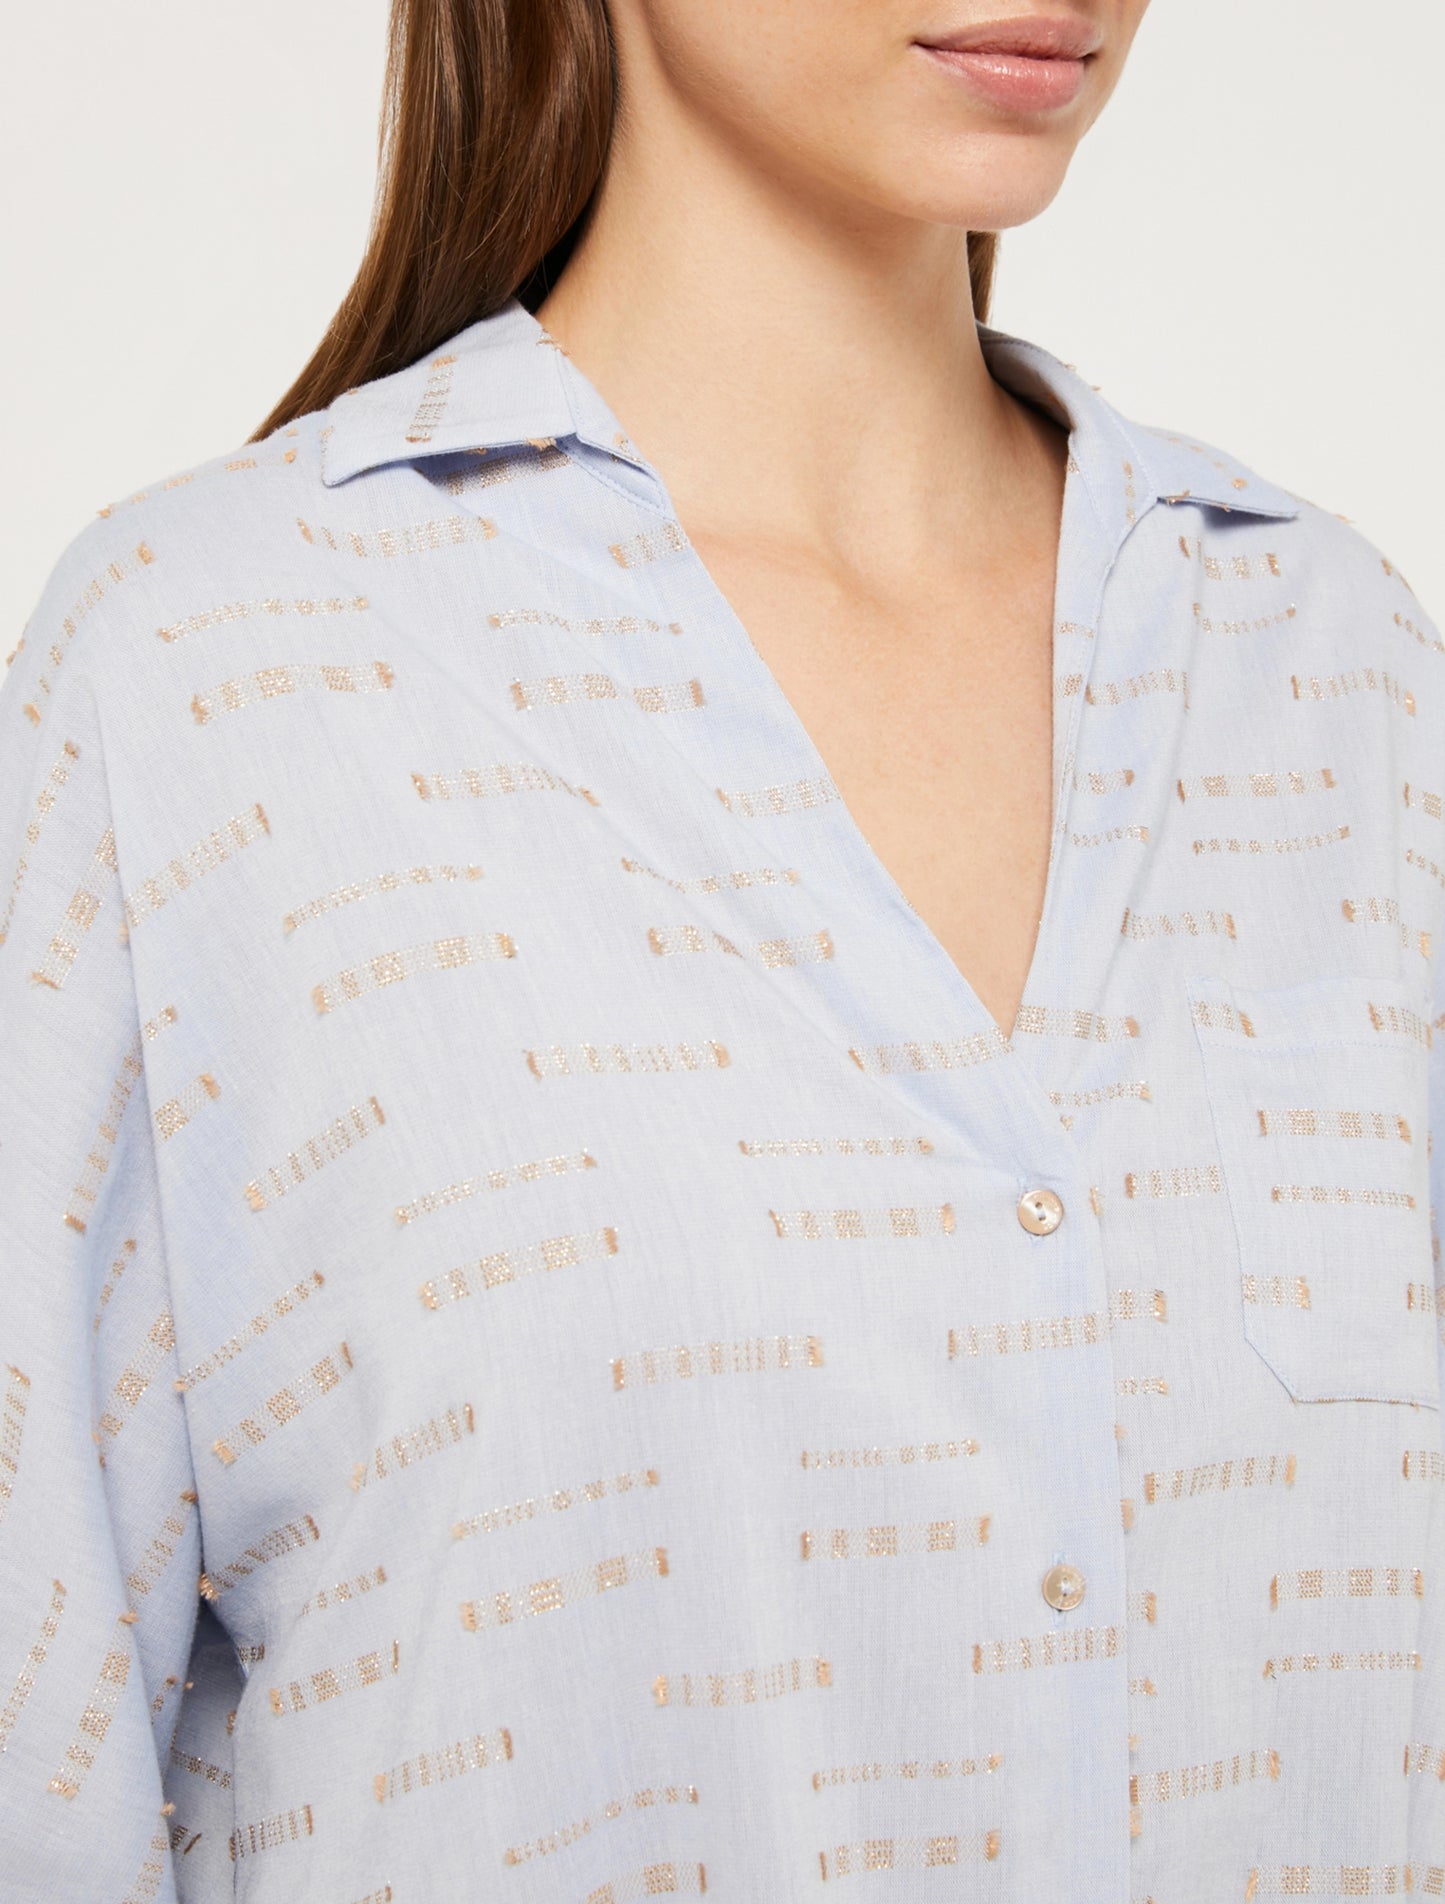 Penny Black | Cancun Boxy shirt - light blue pattern